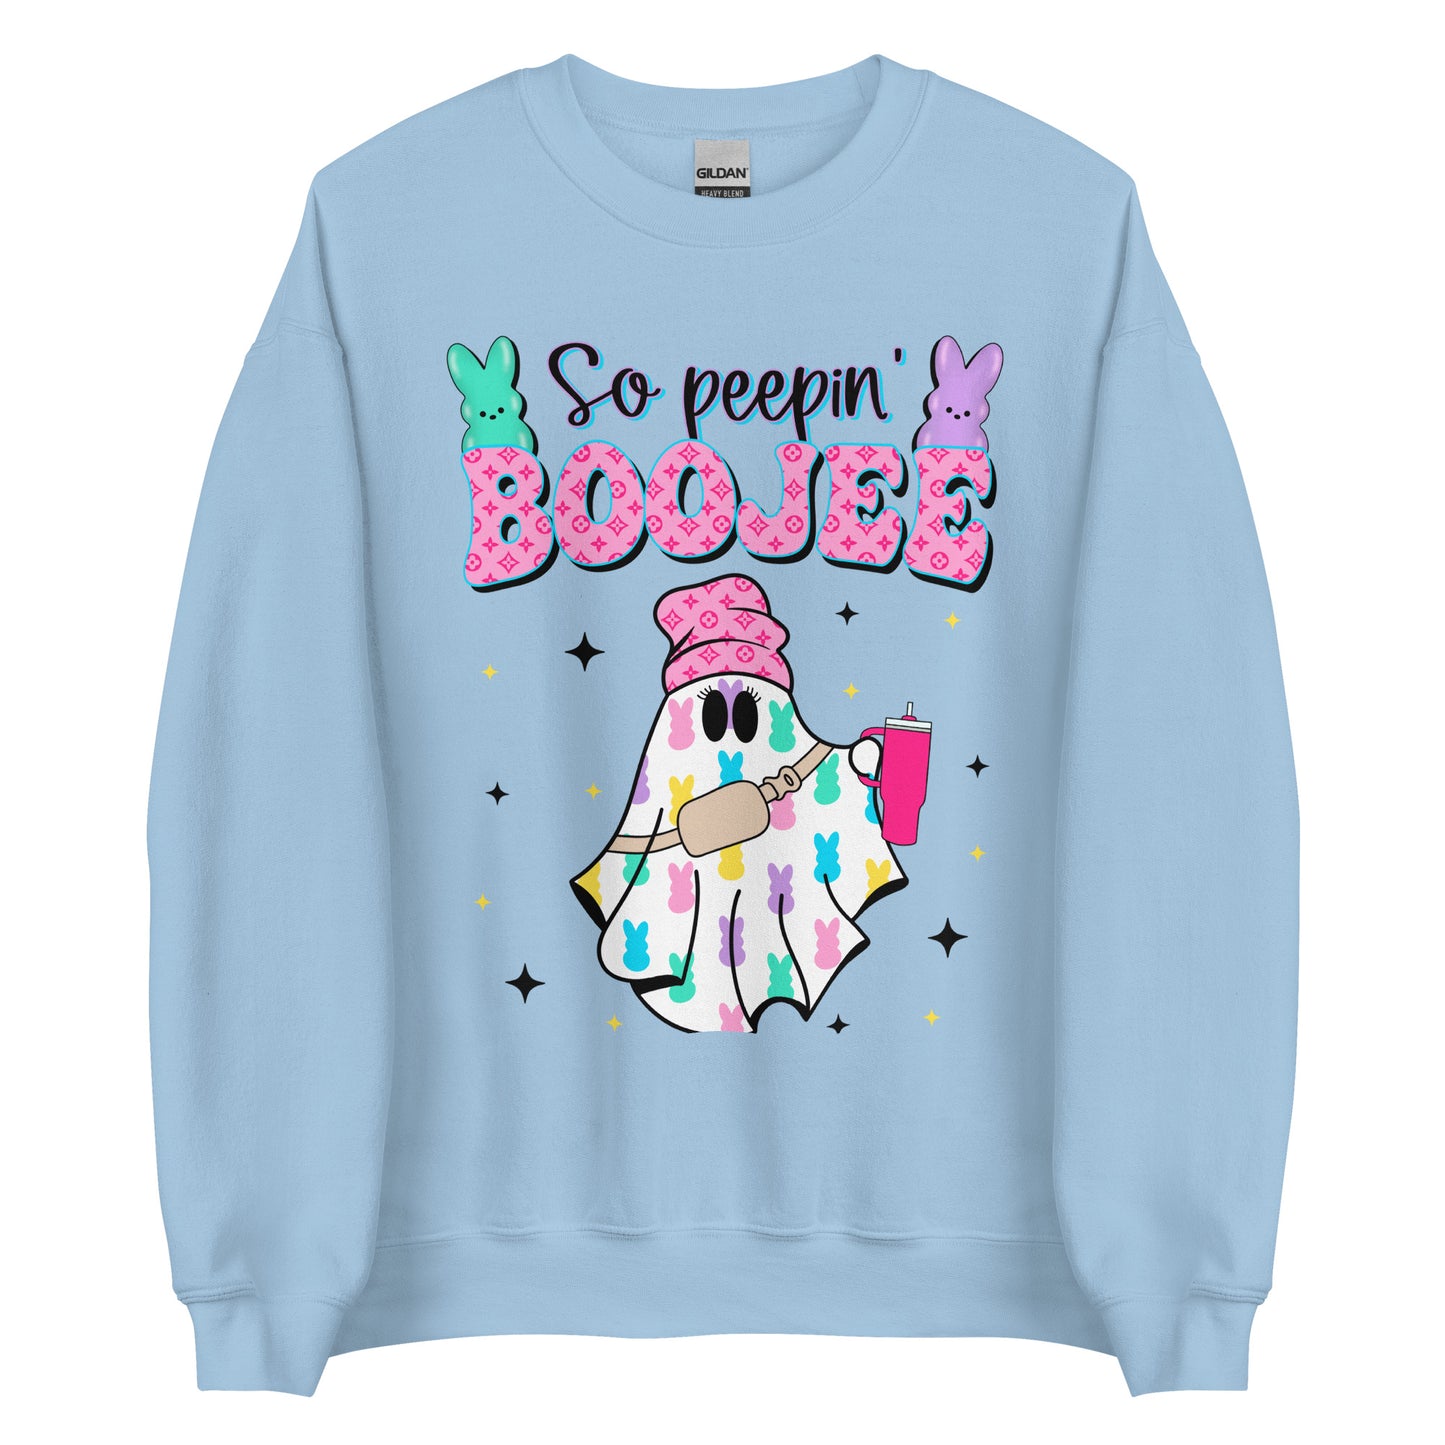 So Peepin' Boojee Sweatshirt